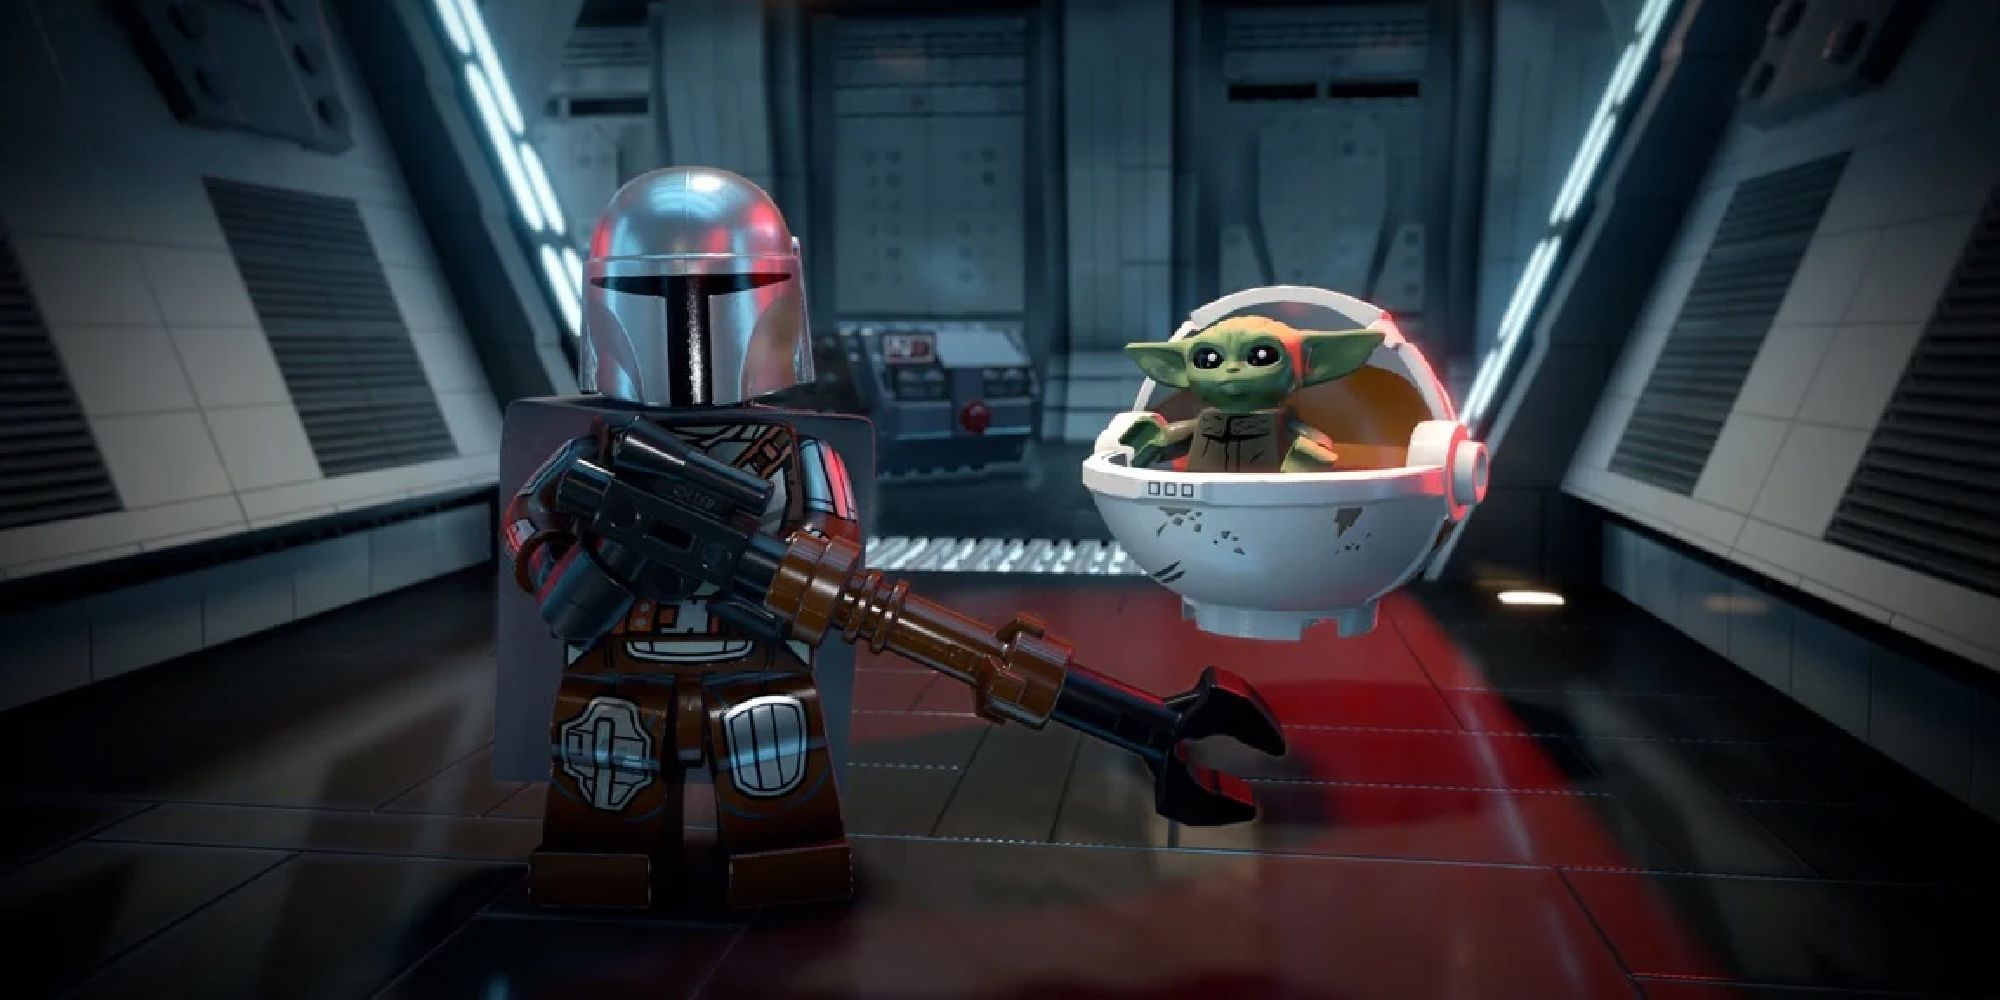 Lego Star Wars The Skywalker Saga Should Have Included The TV Series